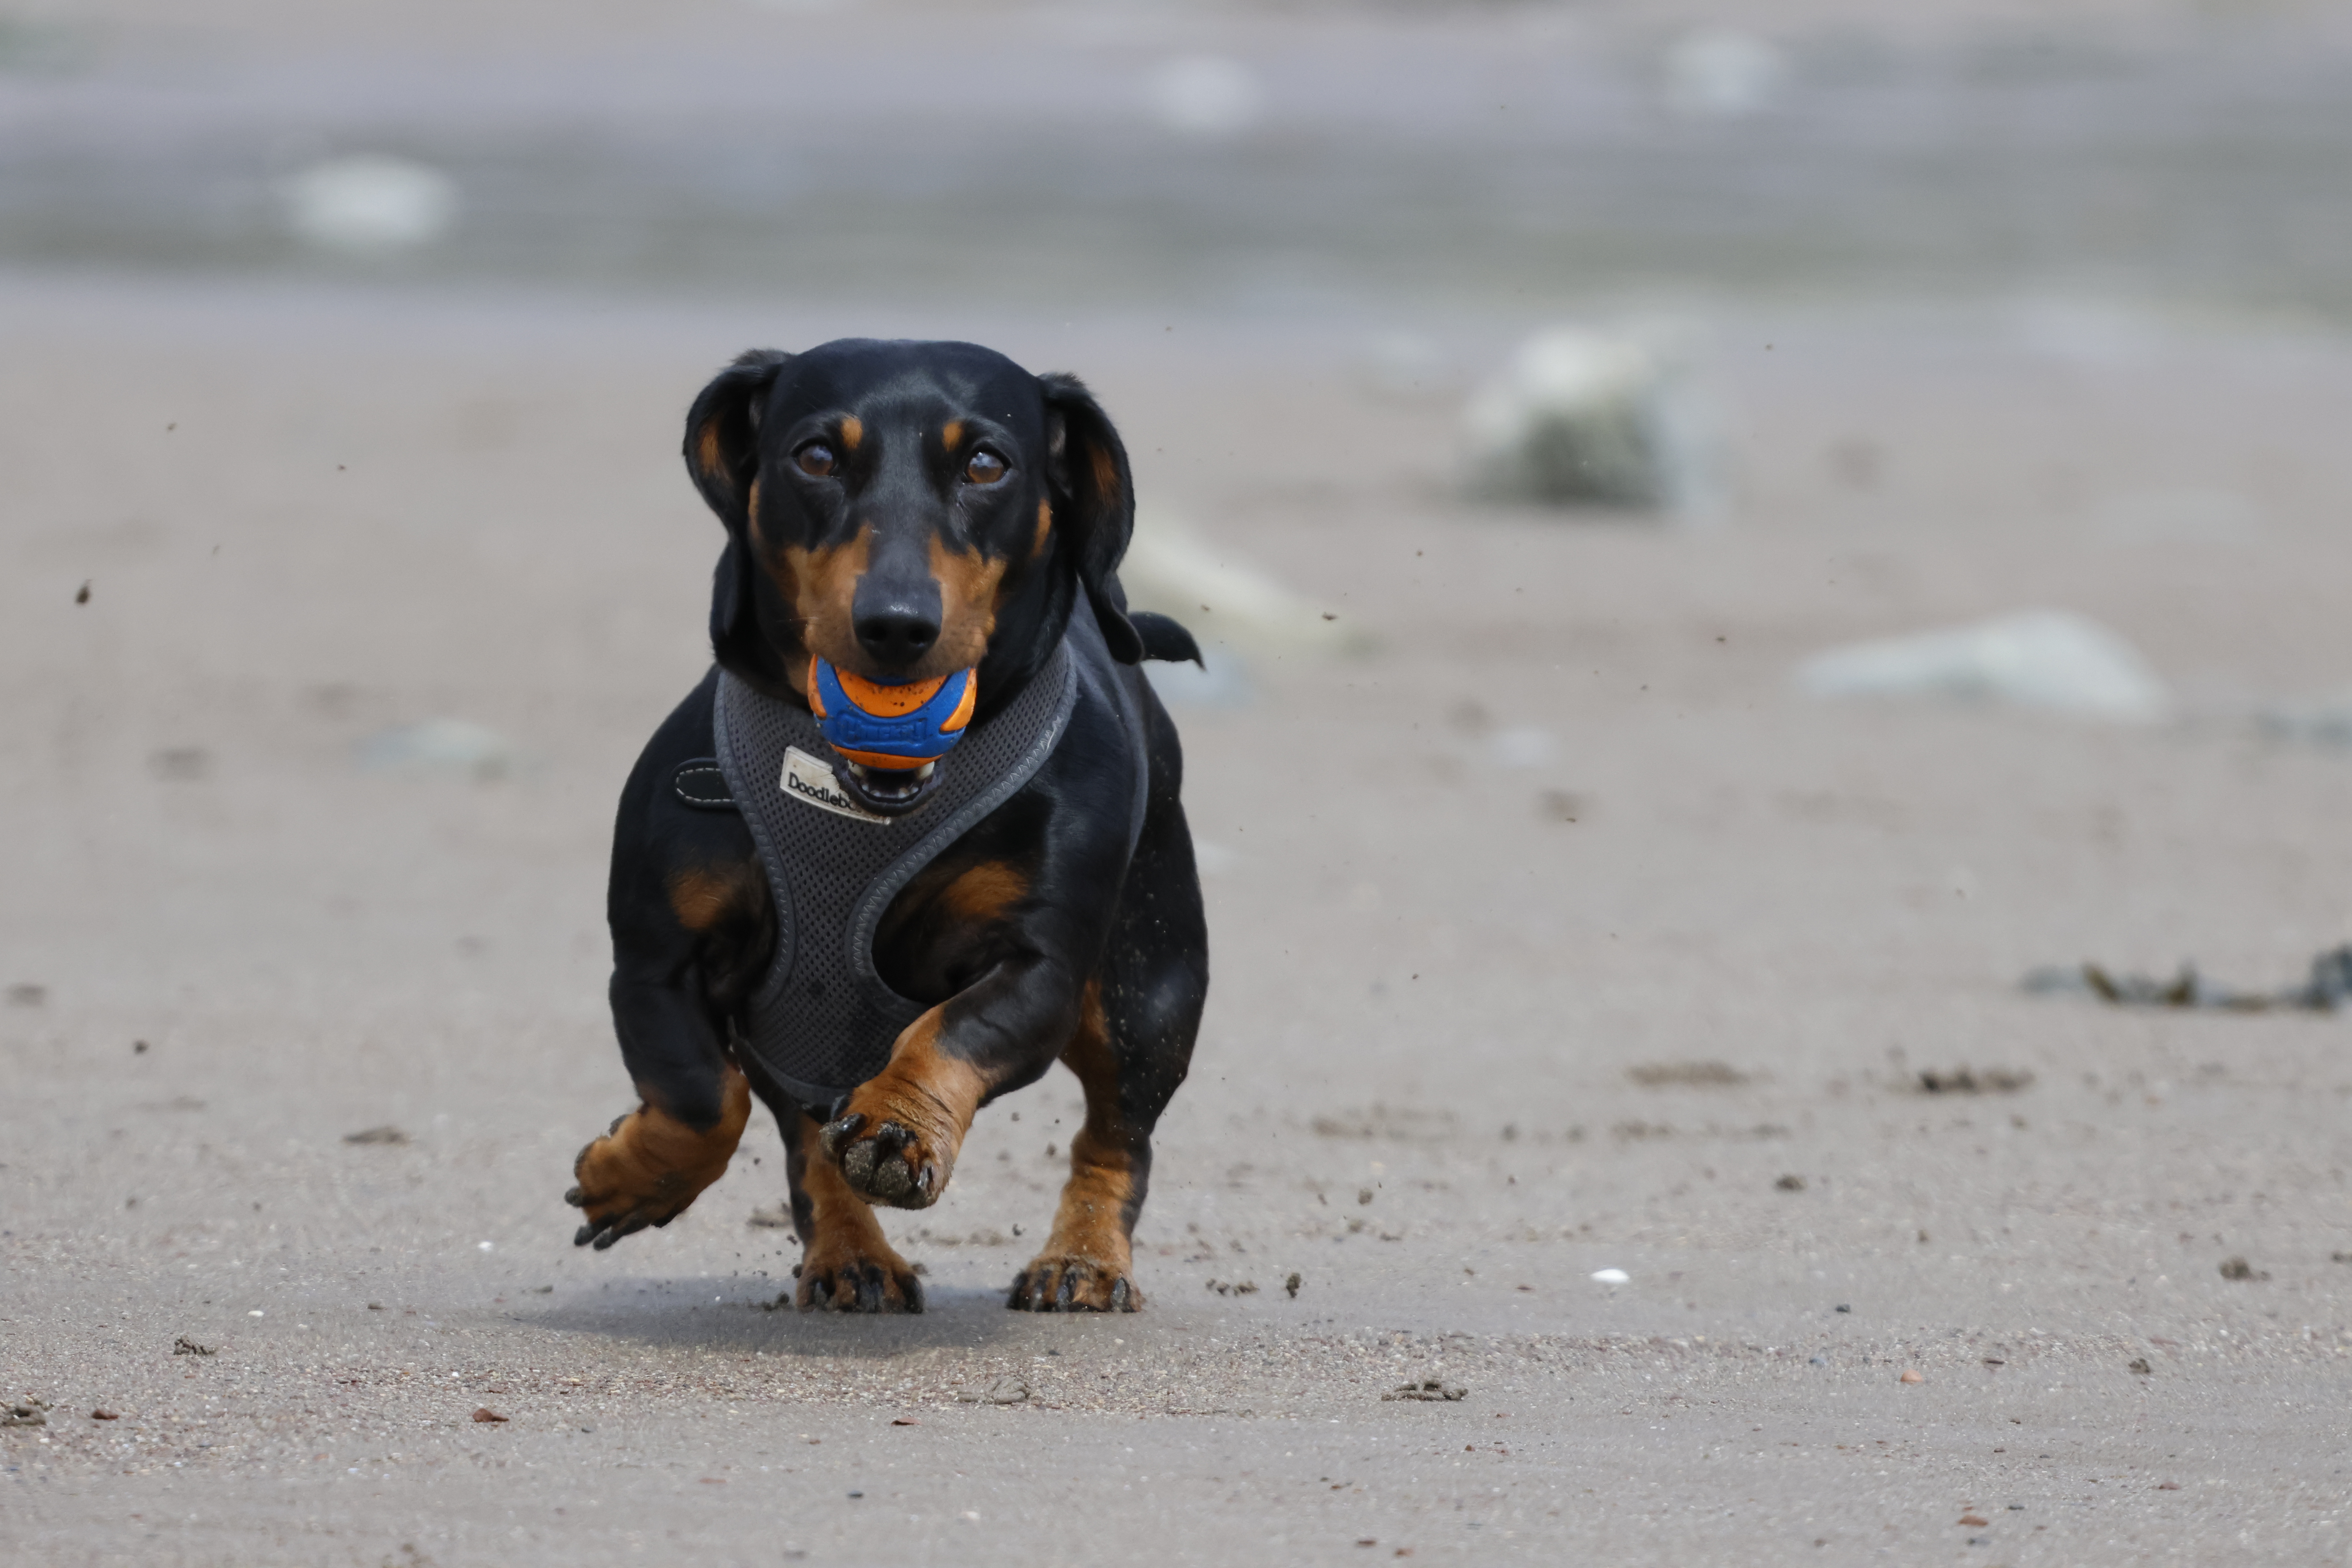 A small dog running on a beach